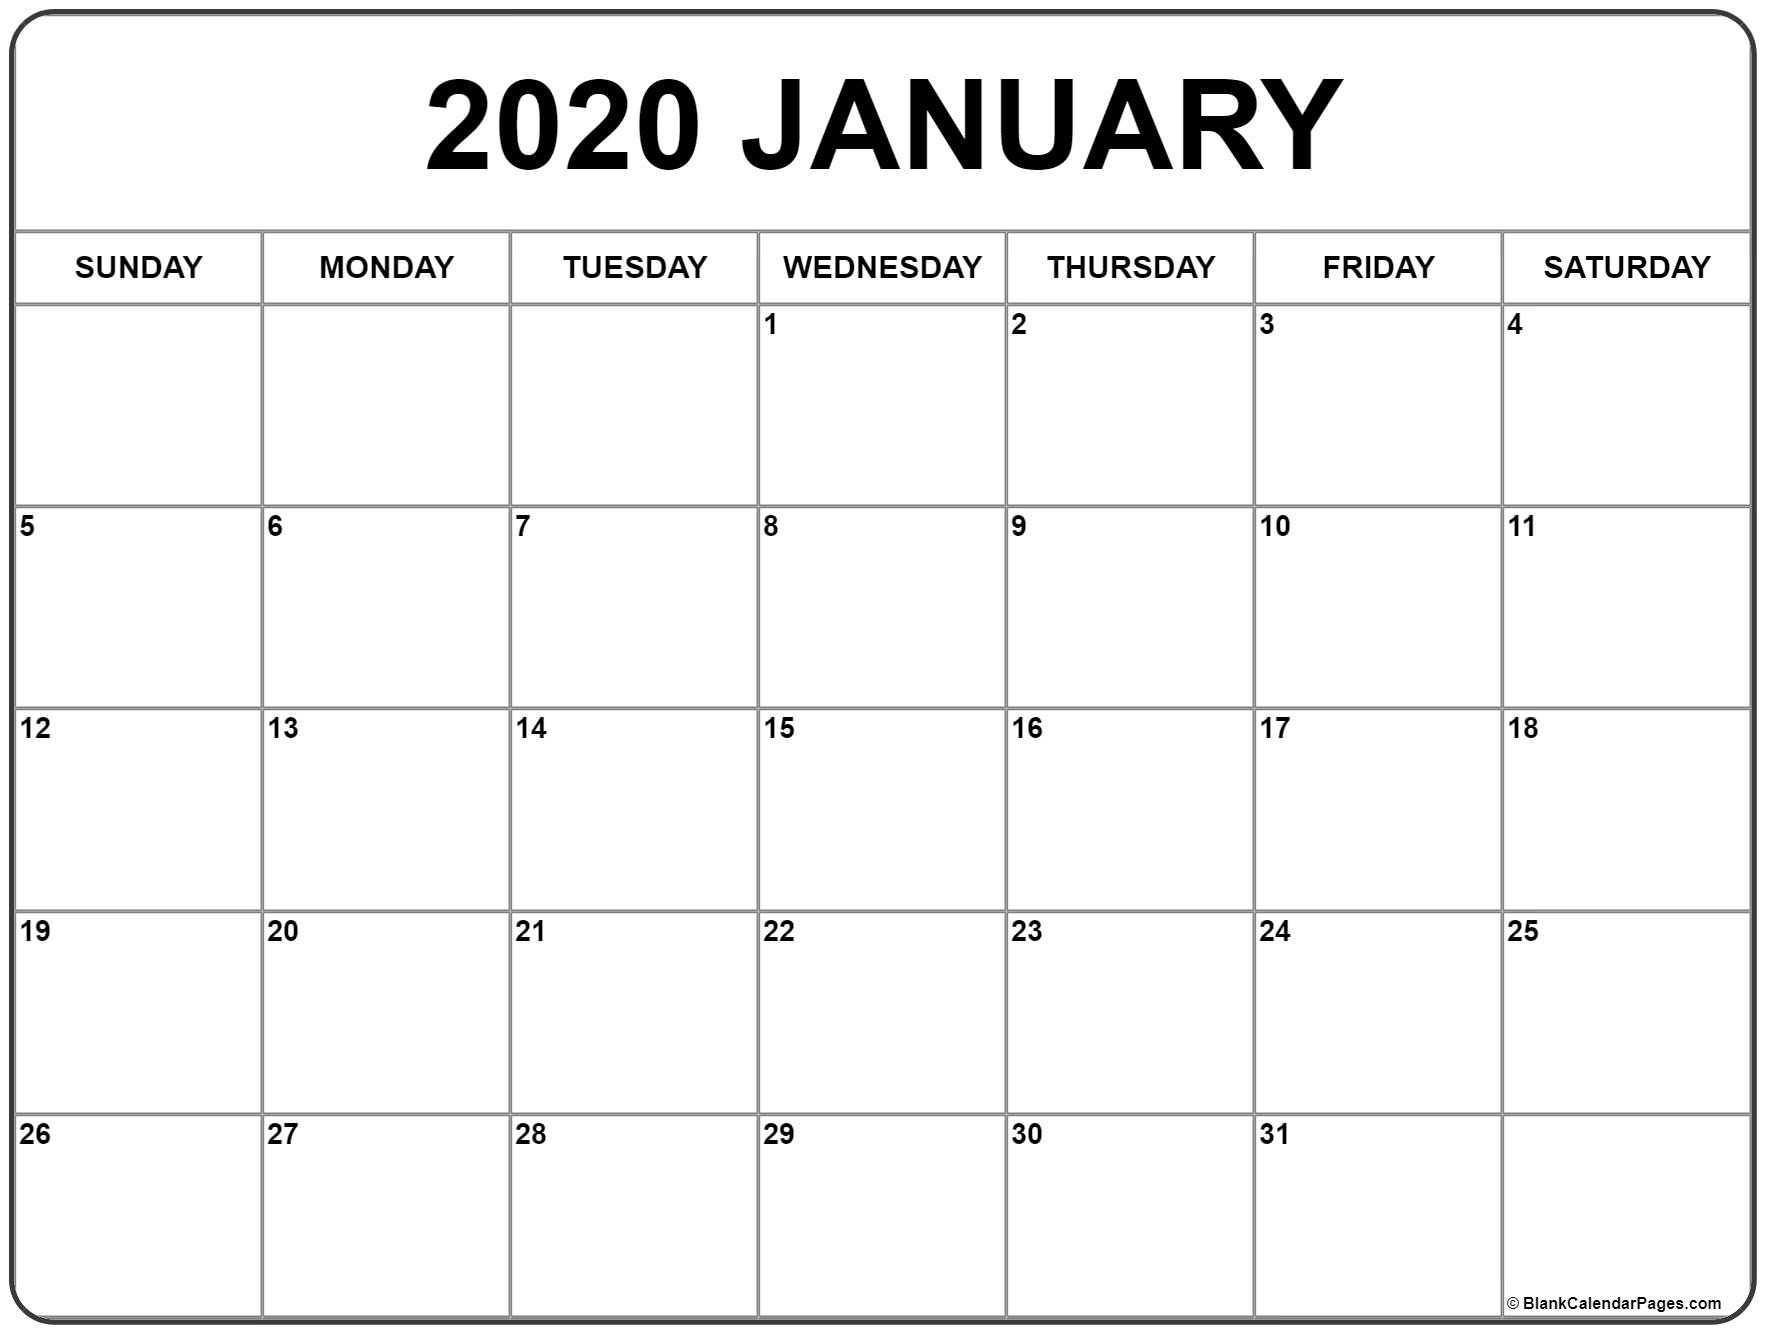 January 2020 Calendar | Free Printable Monthly Calendars-Free Printable January 2020 Calendar Template